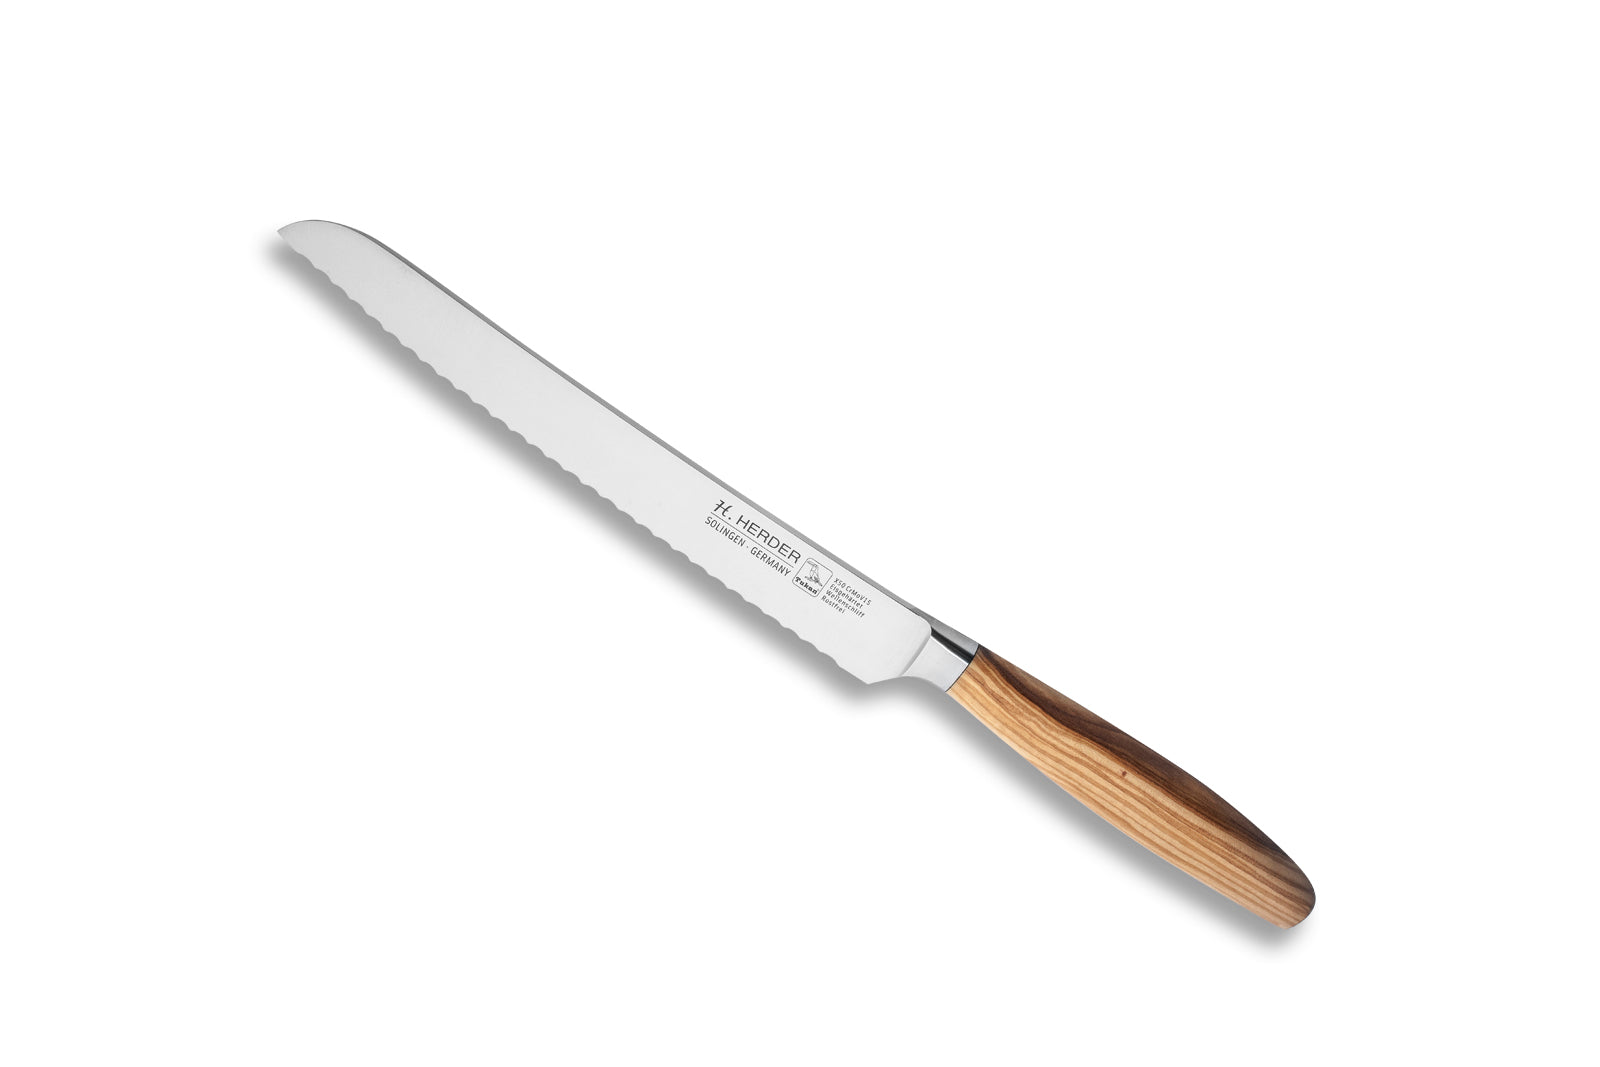 Cuchillo para pan Eterno, madera de olivo, longitud de la hoja 22cm, forjado, filo dentado